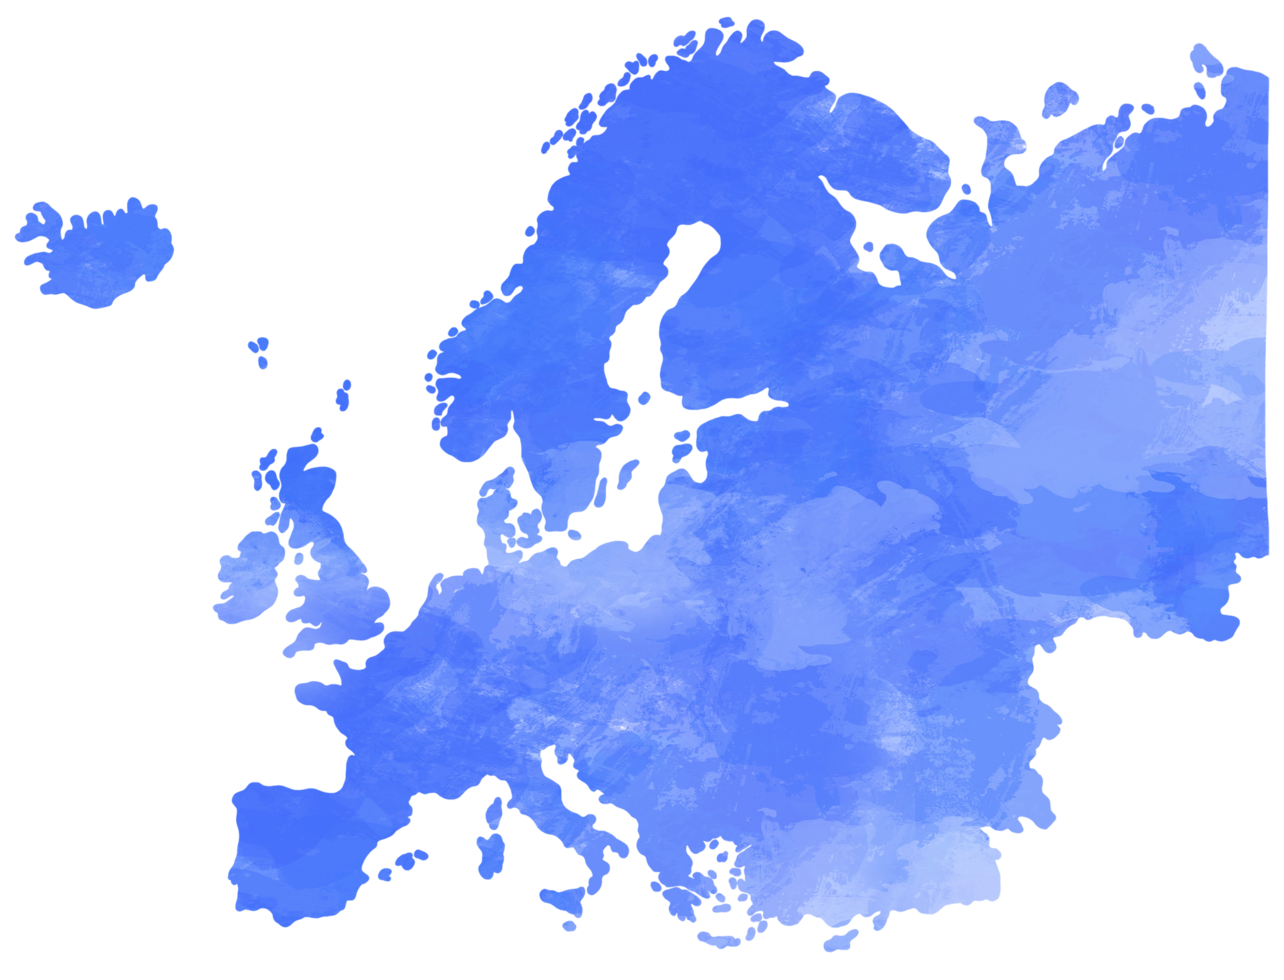 doodle frihandsritning av Europakarta. png